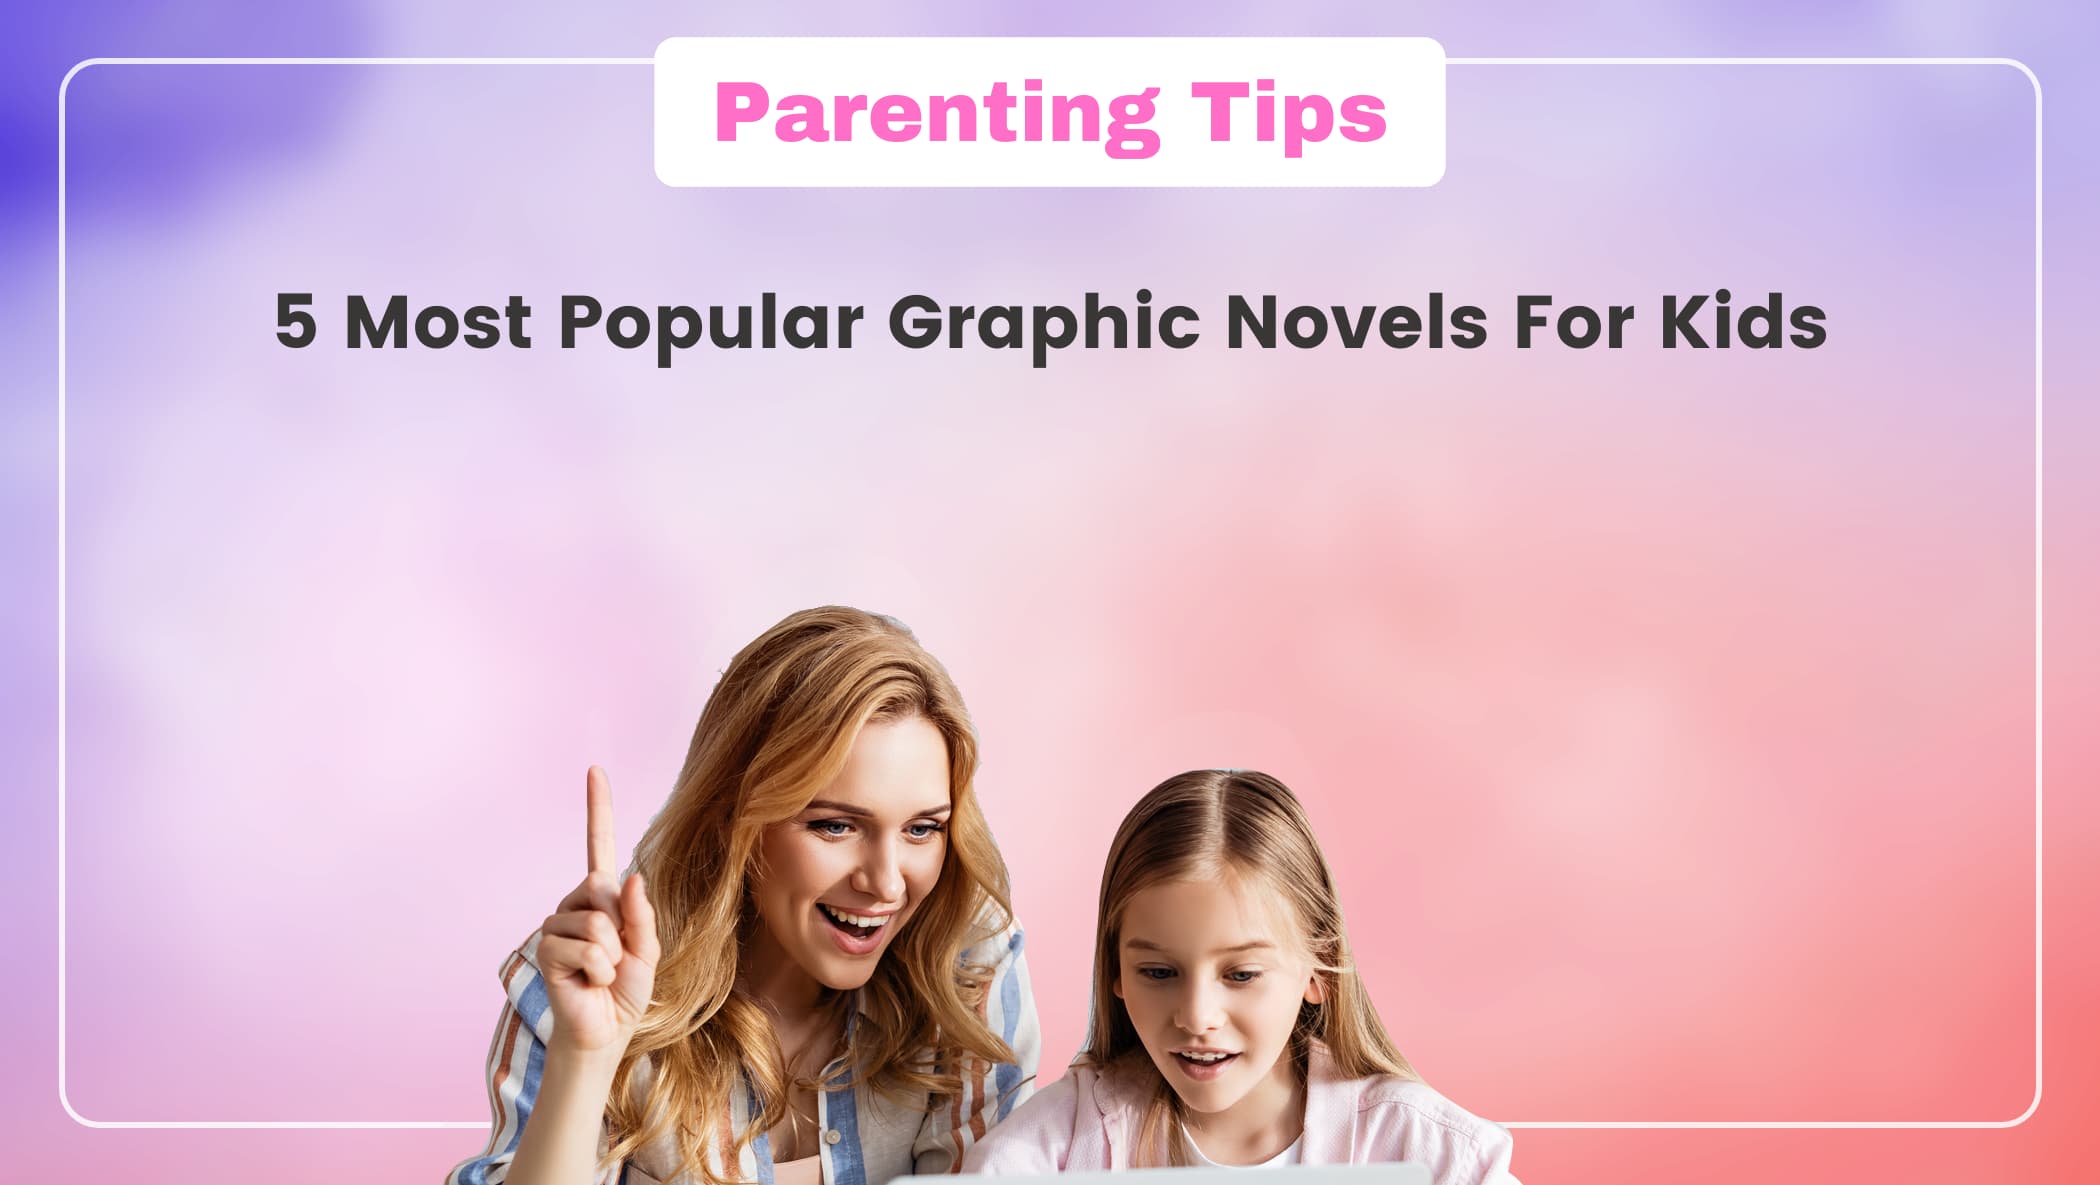 5 Most Popular Graphic Novels For Kids Image